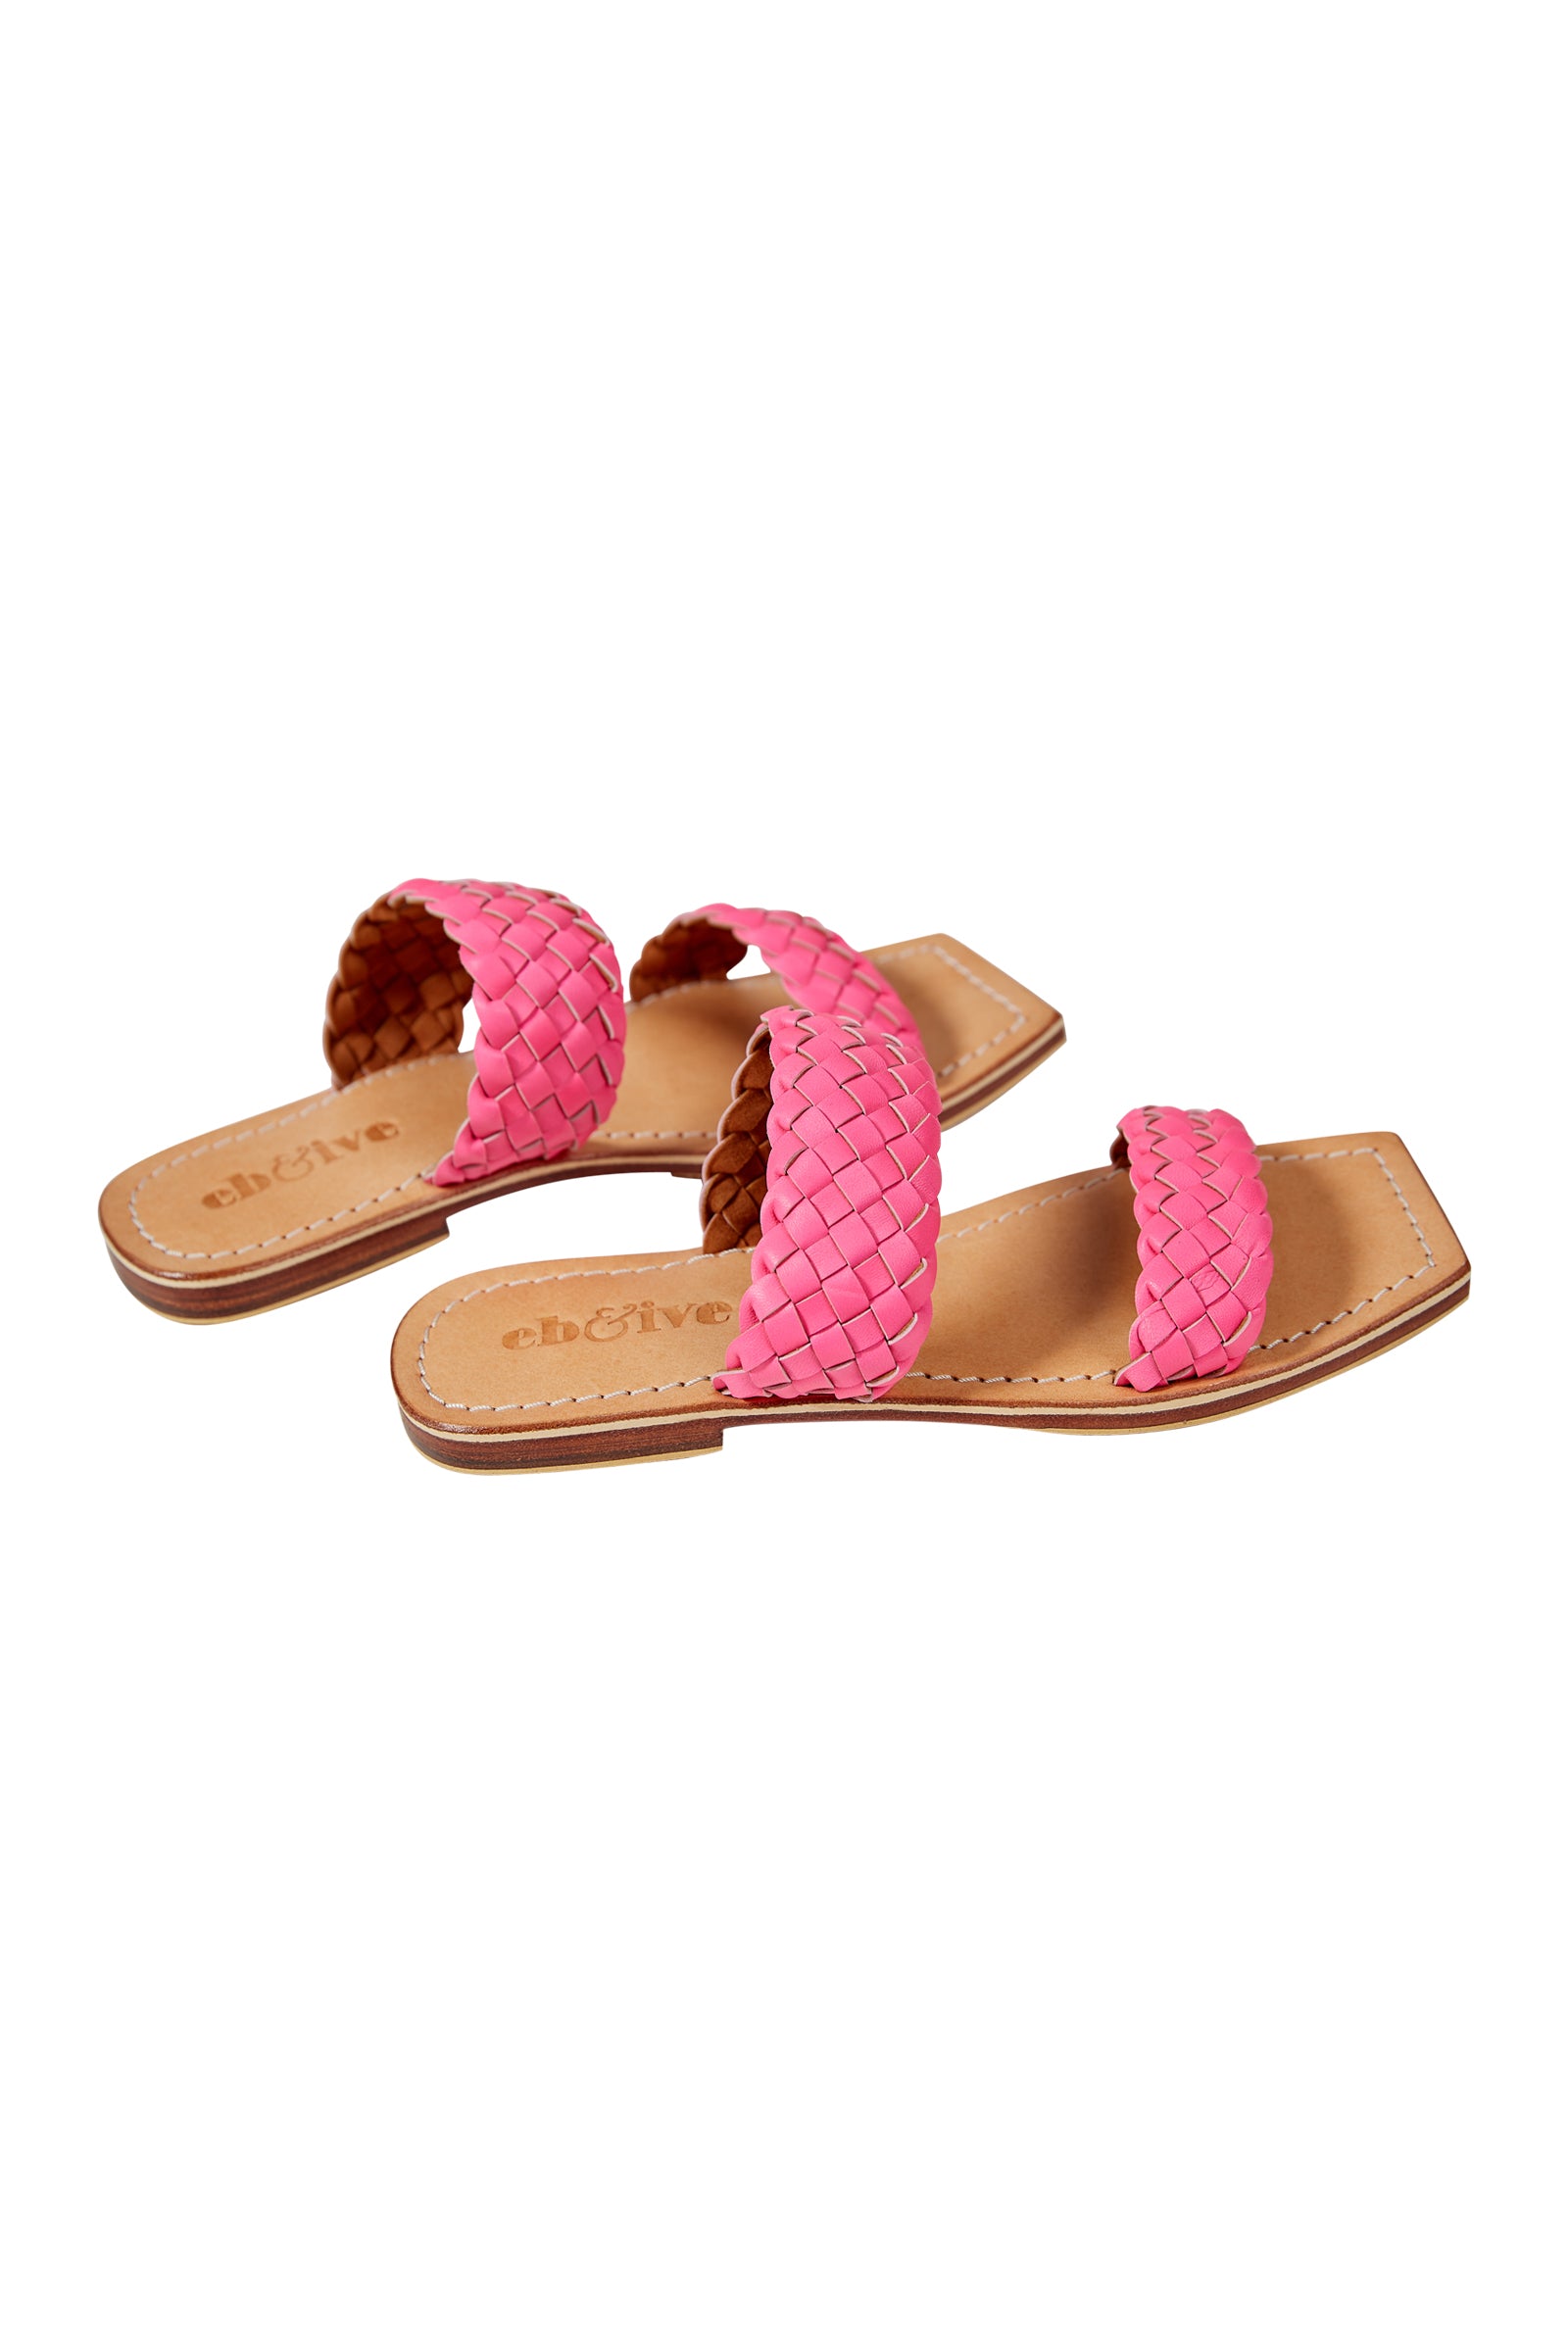 La Vie Sandal - Neon - eb&ive Footwear - Sandals